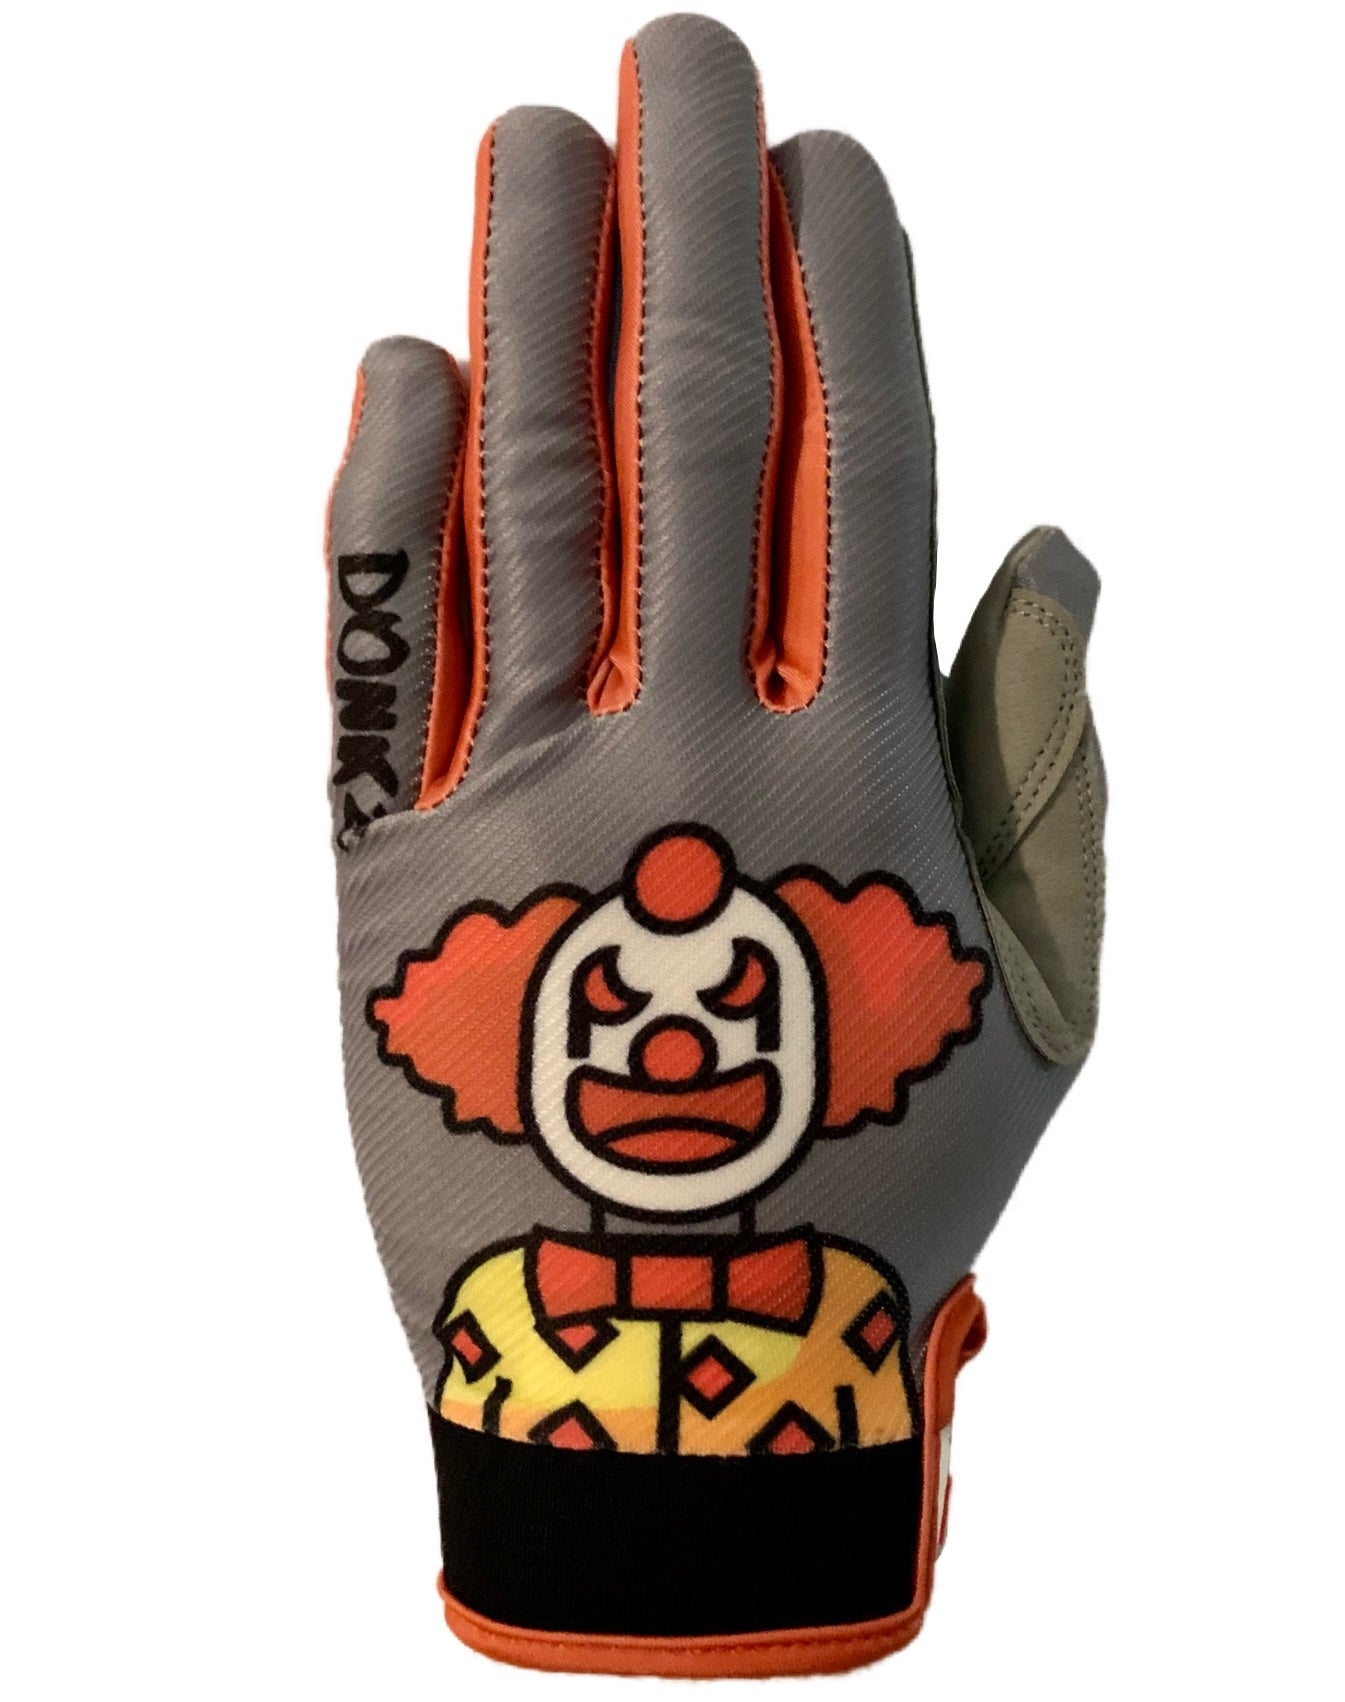 Grey mx gloves with clown design